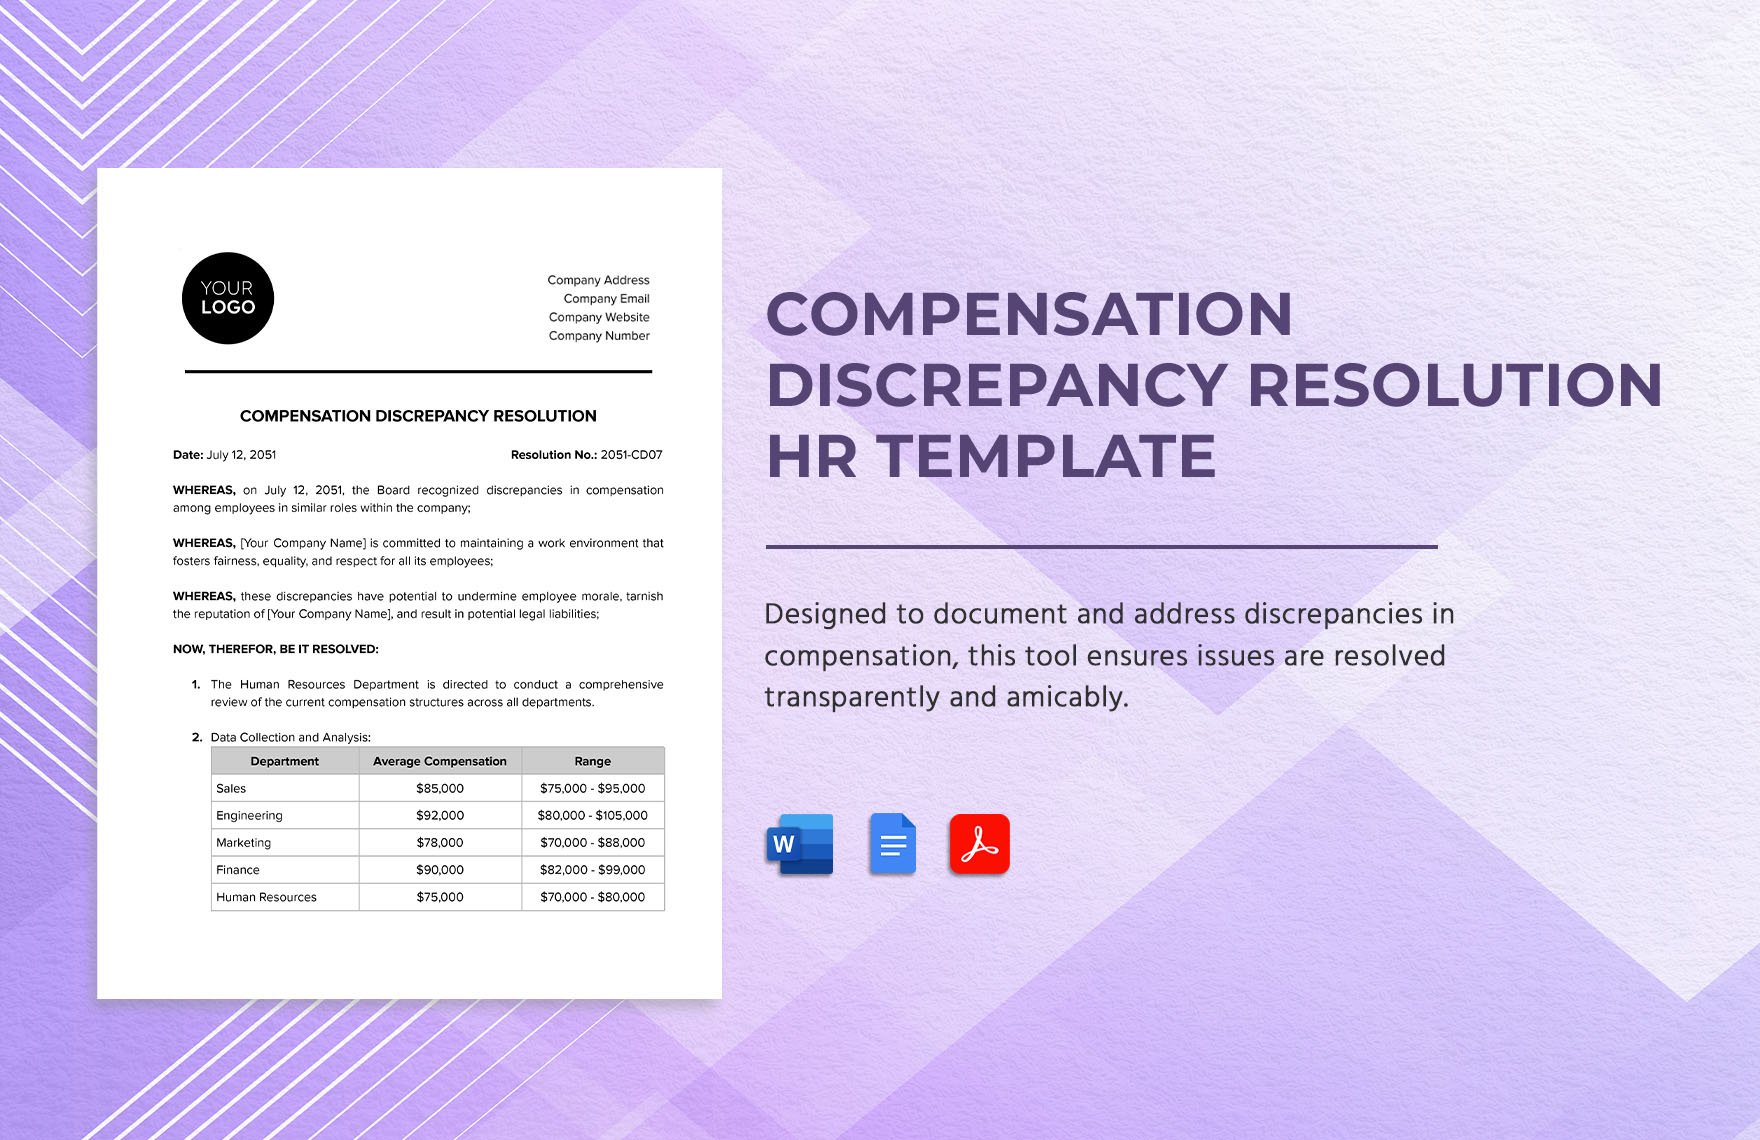 Compensation Discrepancy Resolution HR Template